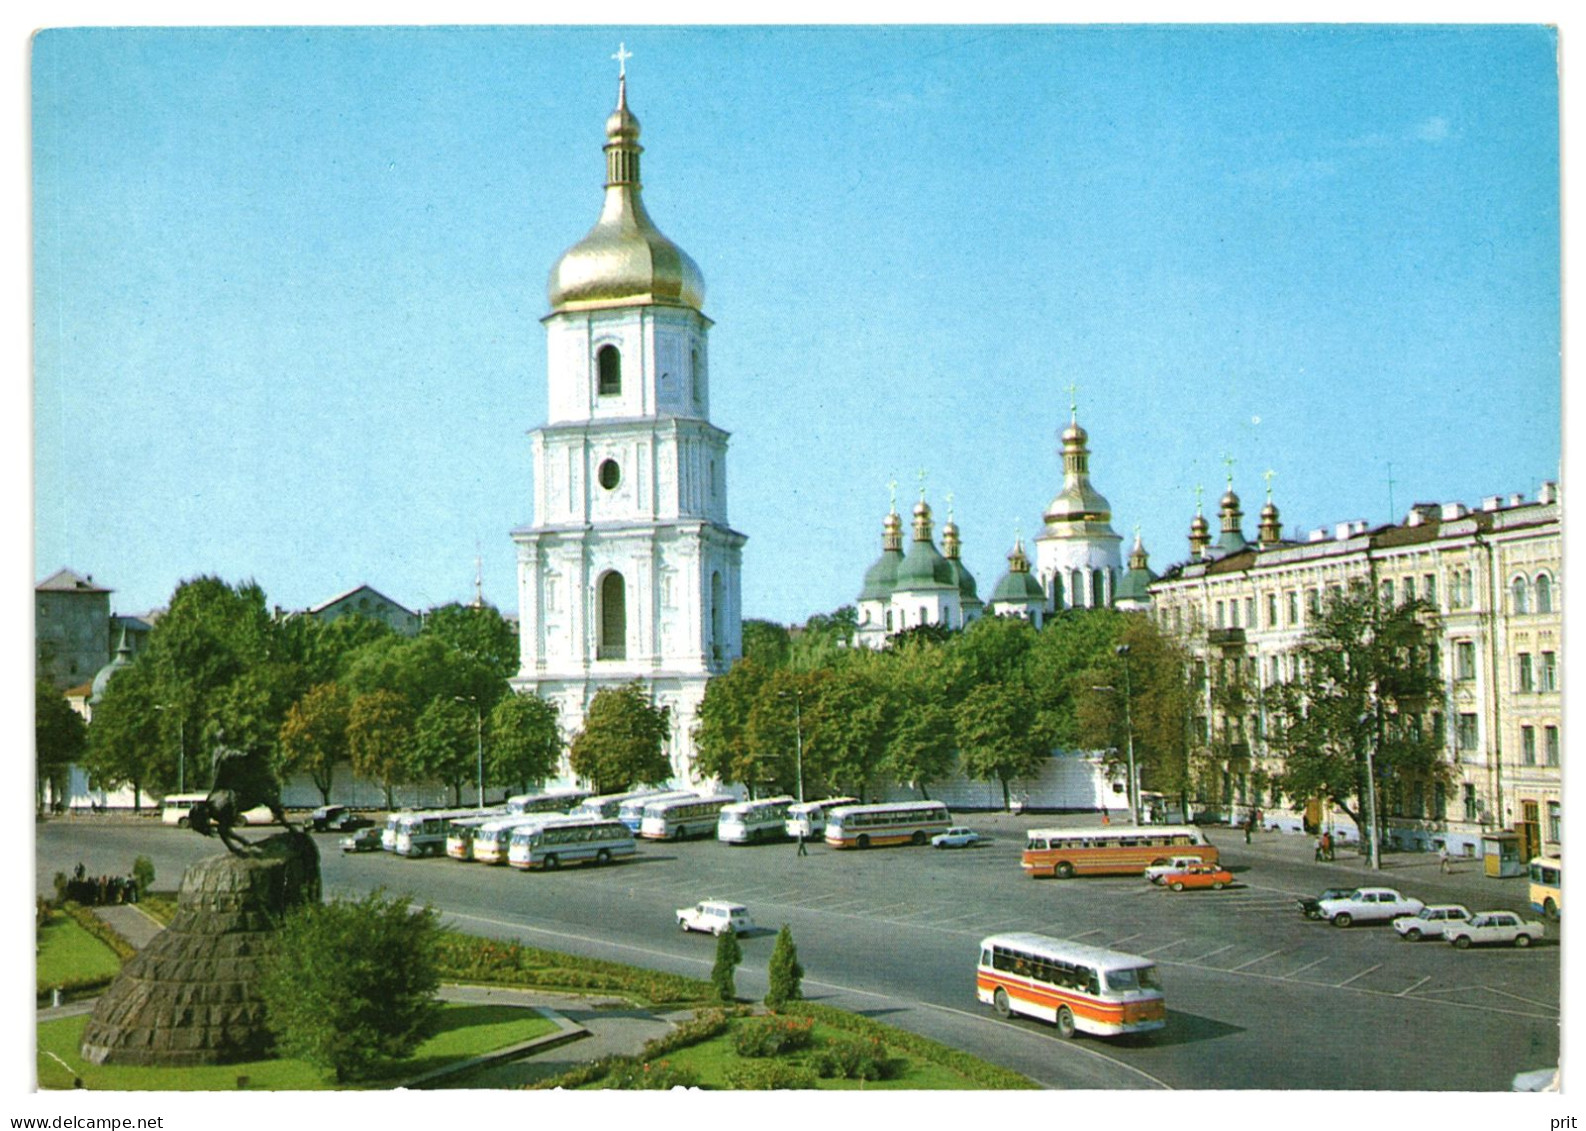 Bogdan Khmelnitsky Square Kyiv Soviet Ukraine USSR Vintage Buses 1981 3K Stamped Postal Stationery Card Postcard Unused - 1980-91